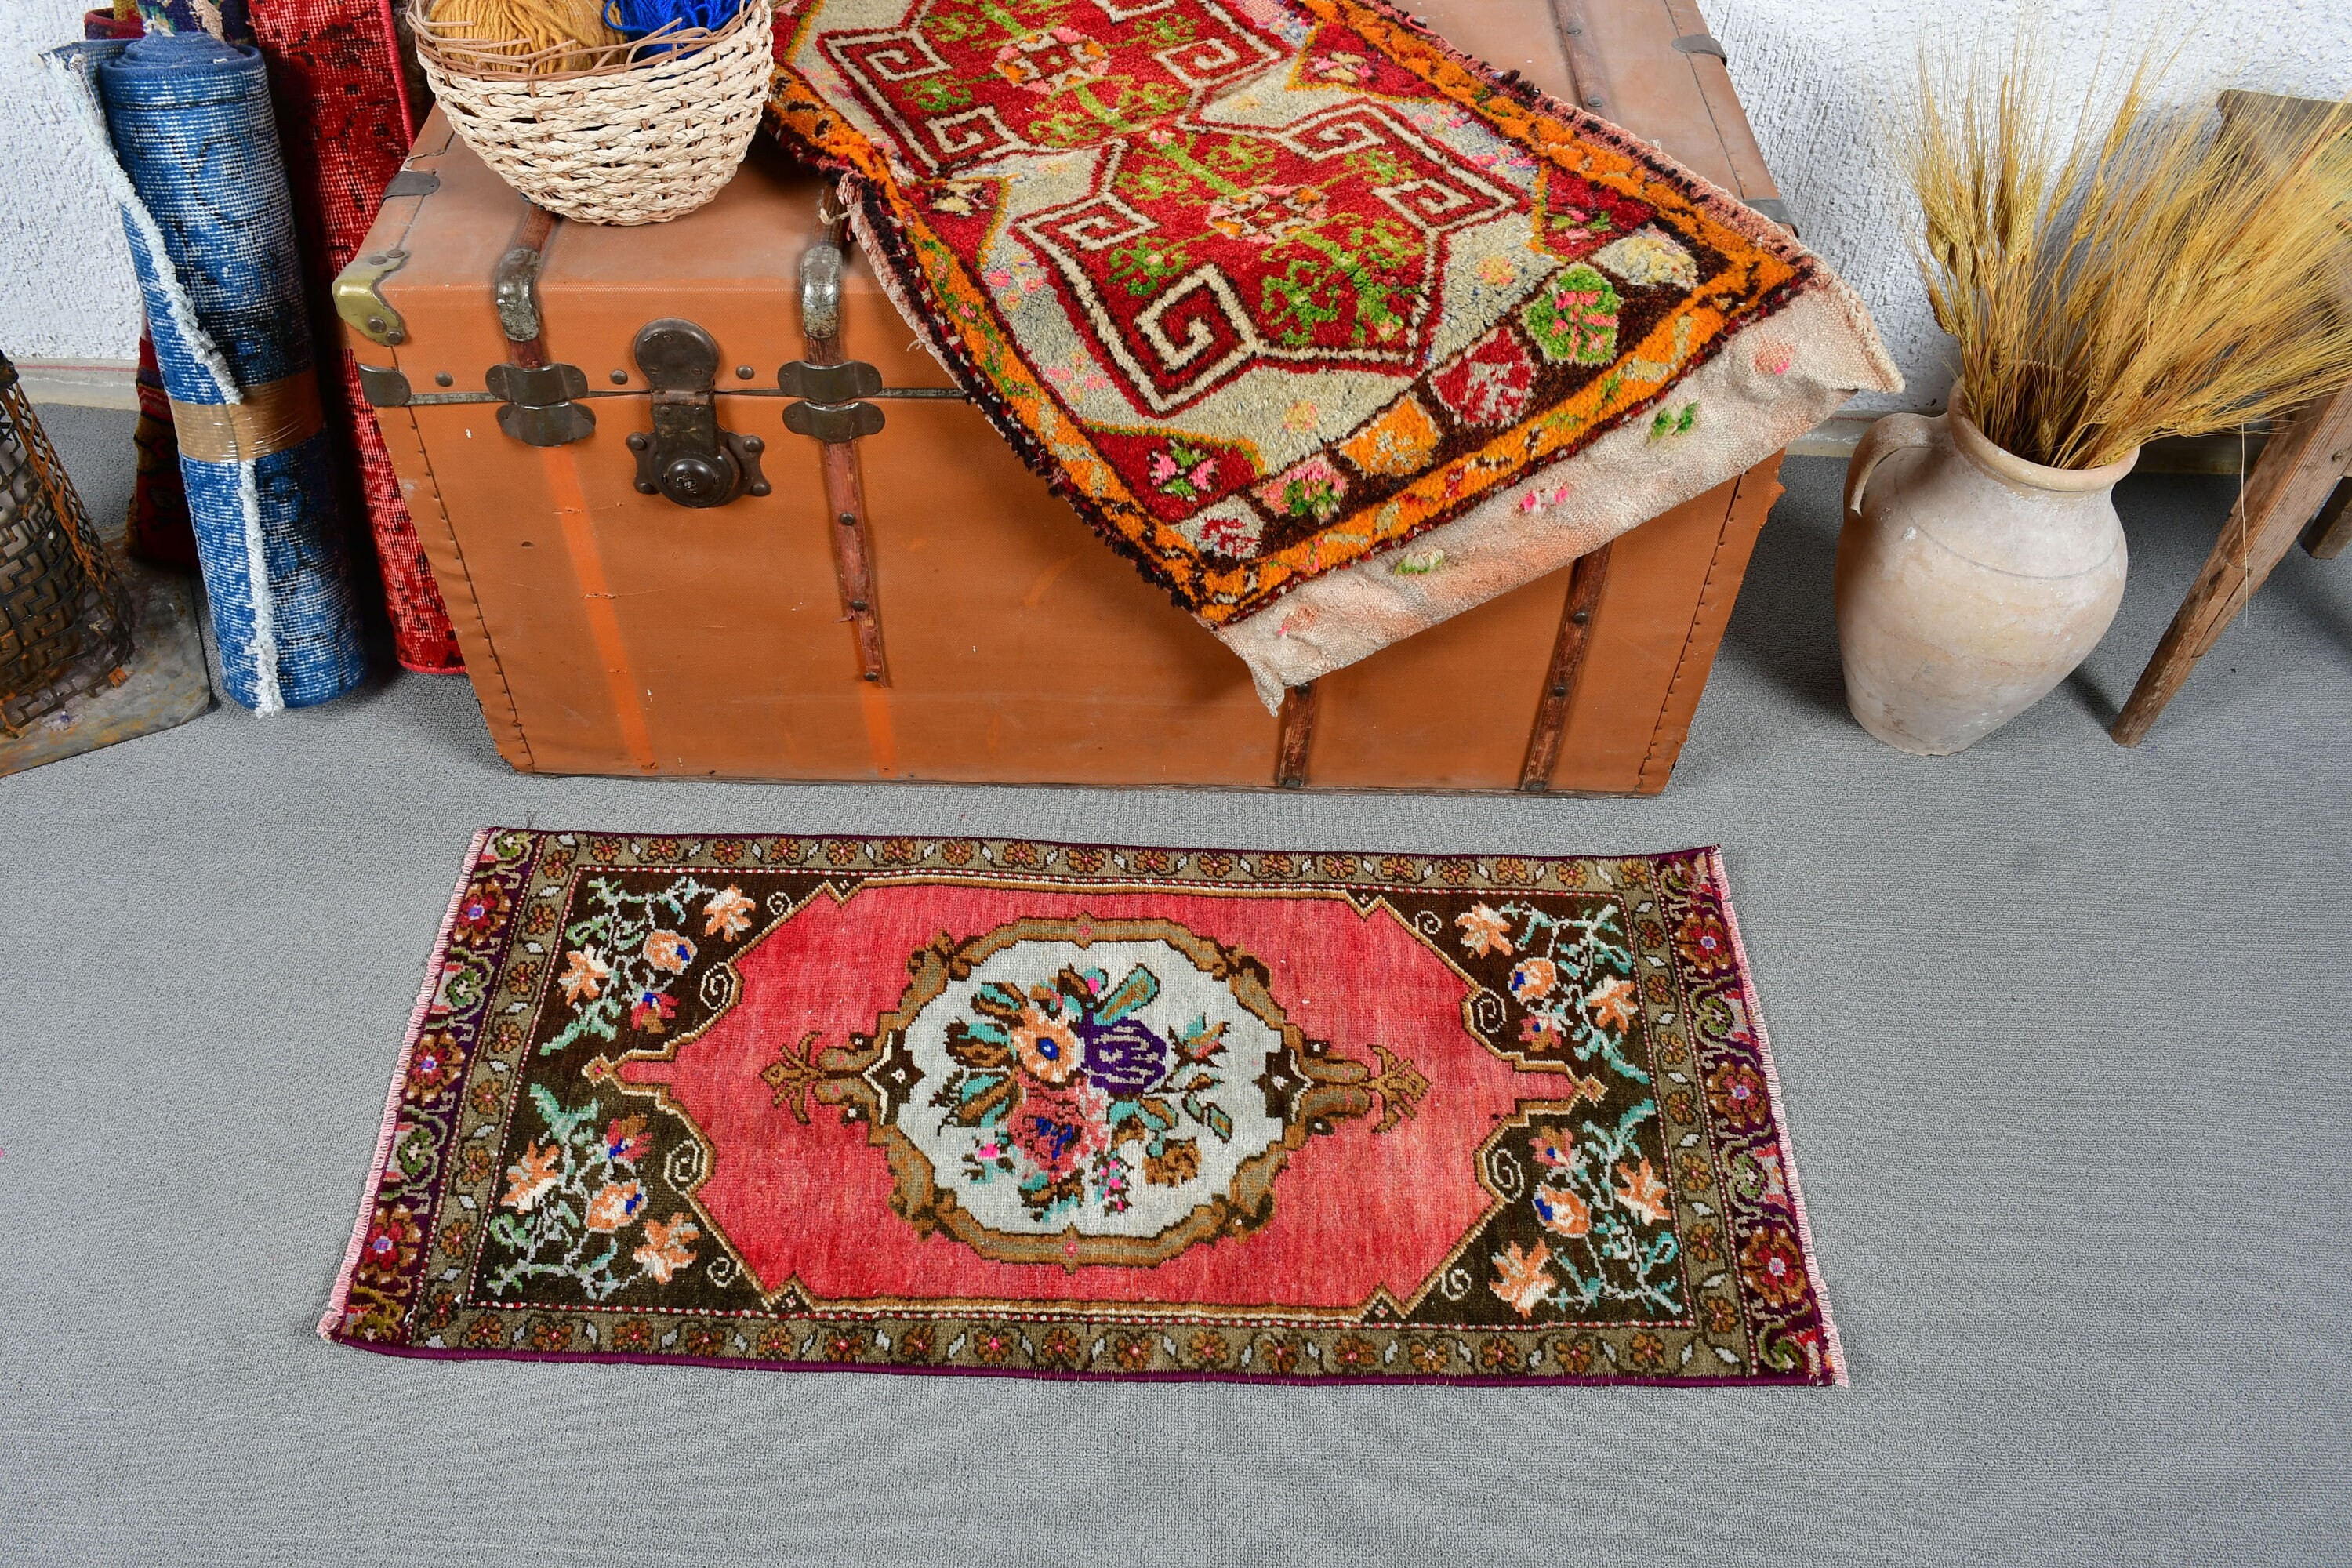 Turkish Rugs, Entry Rug, Antique Rugs, Red Wool Rug, Cool Rug, Rugs for Bedroom, 1.5x3.3 ft Small Rug, Bedroom Rug, Vintage Rug, Old Rugs